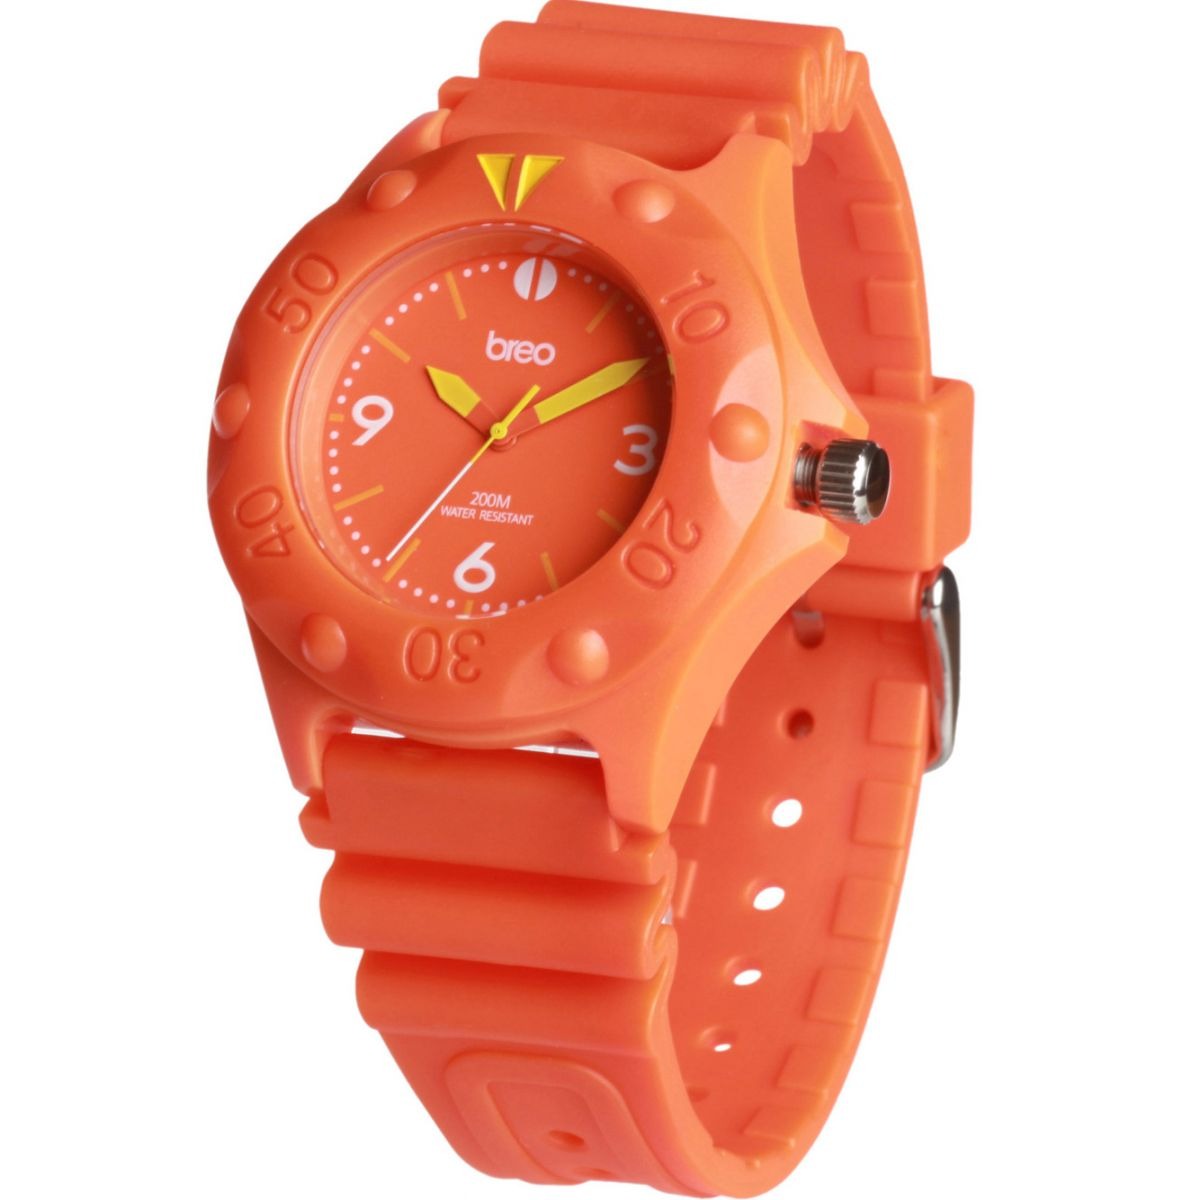 Breo - Watch Orange for Man by Watch Shop GOOFASH